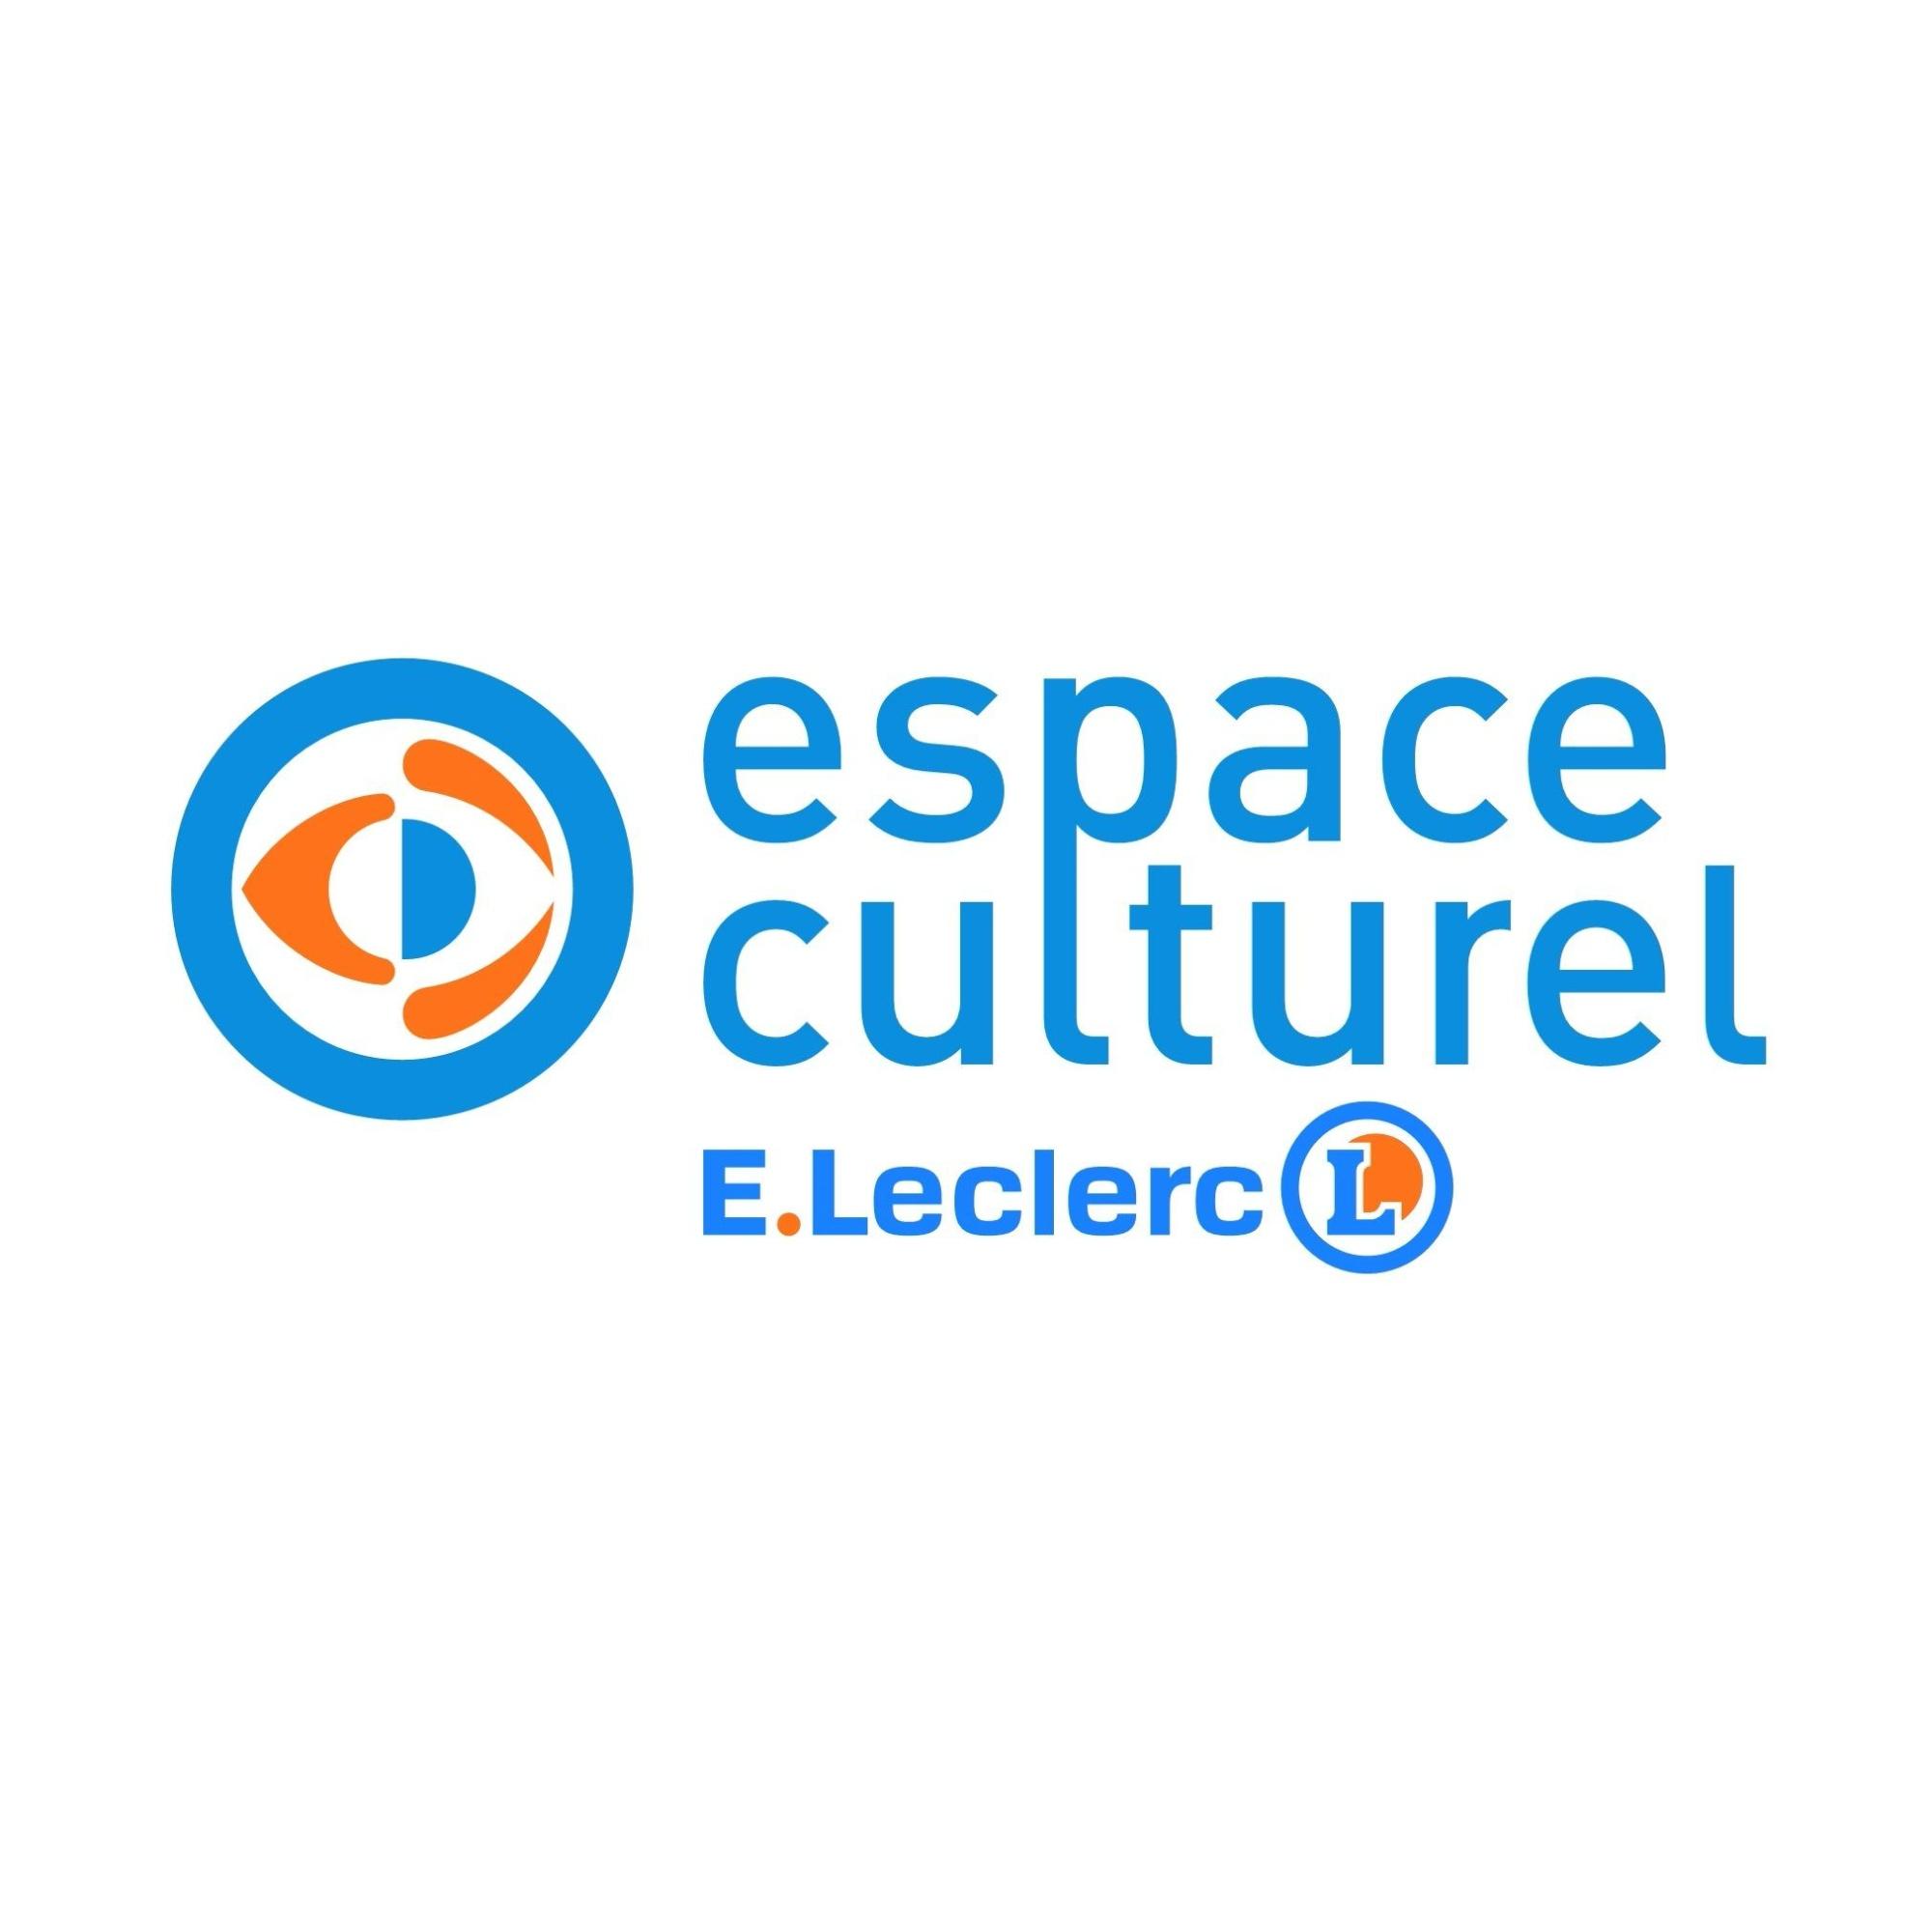 E.leclerc Espace Culturel Bellaing